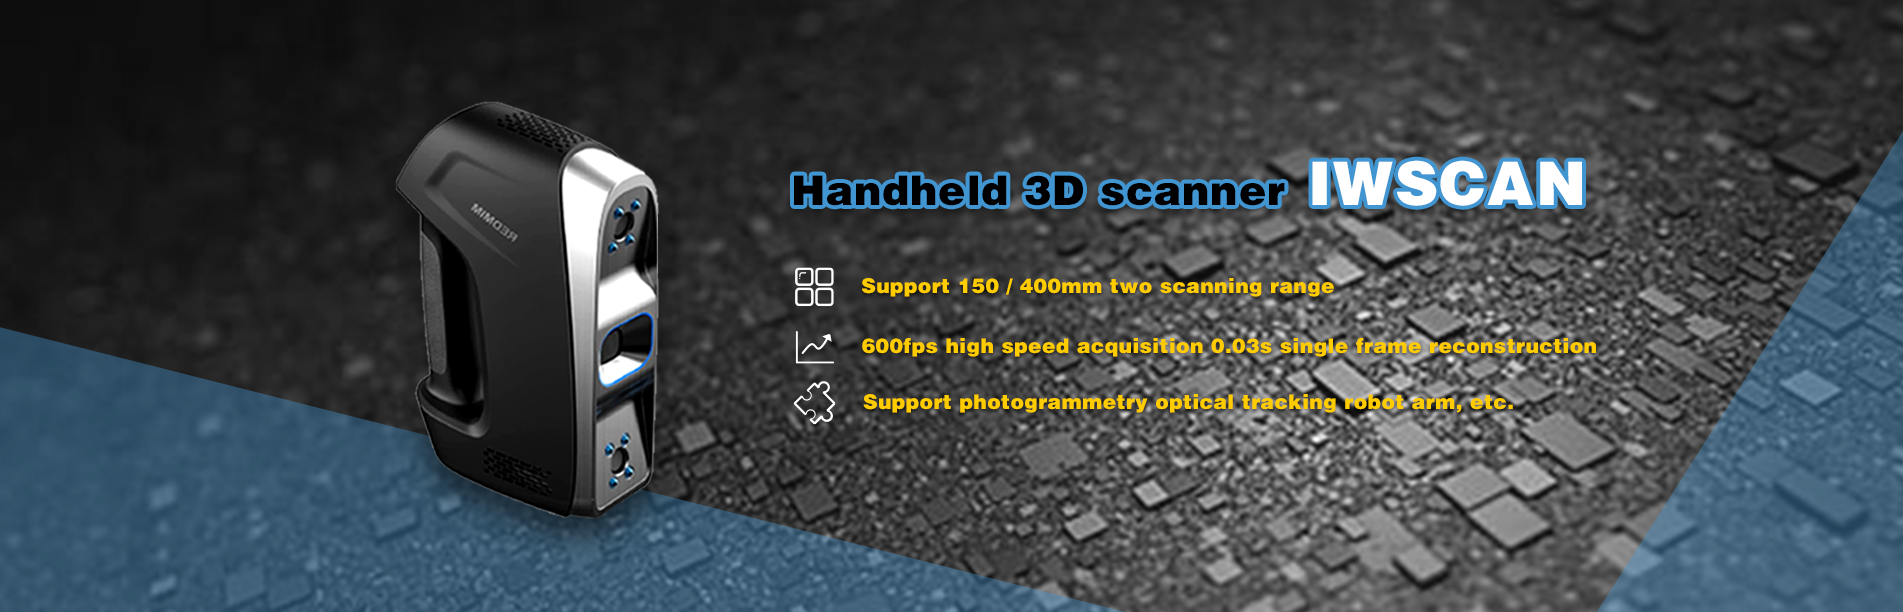 Handheld 3D scanner 